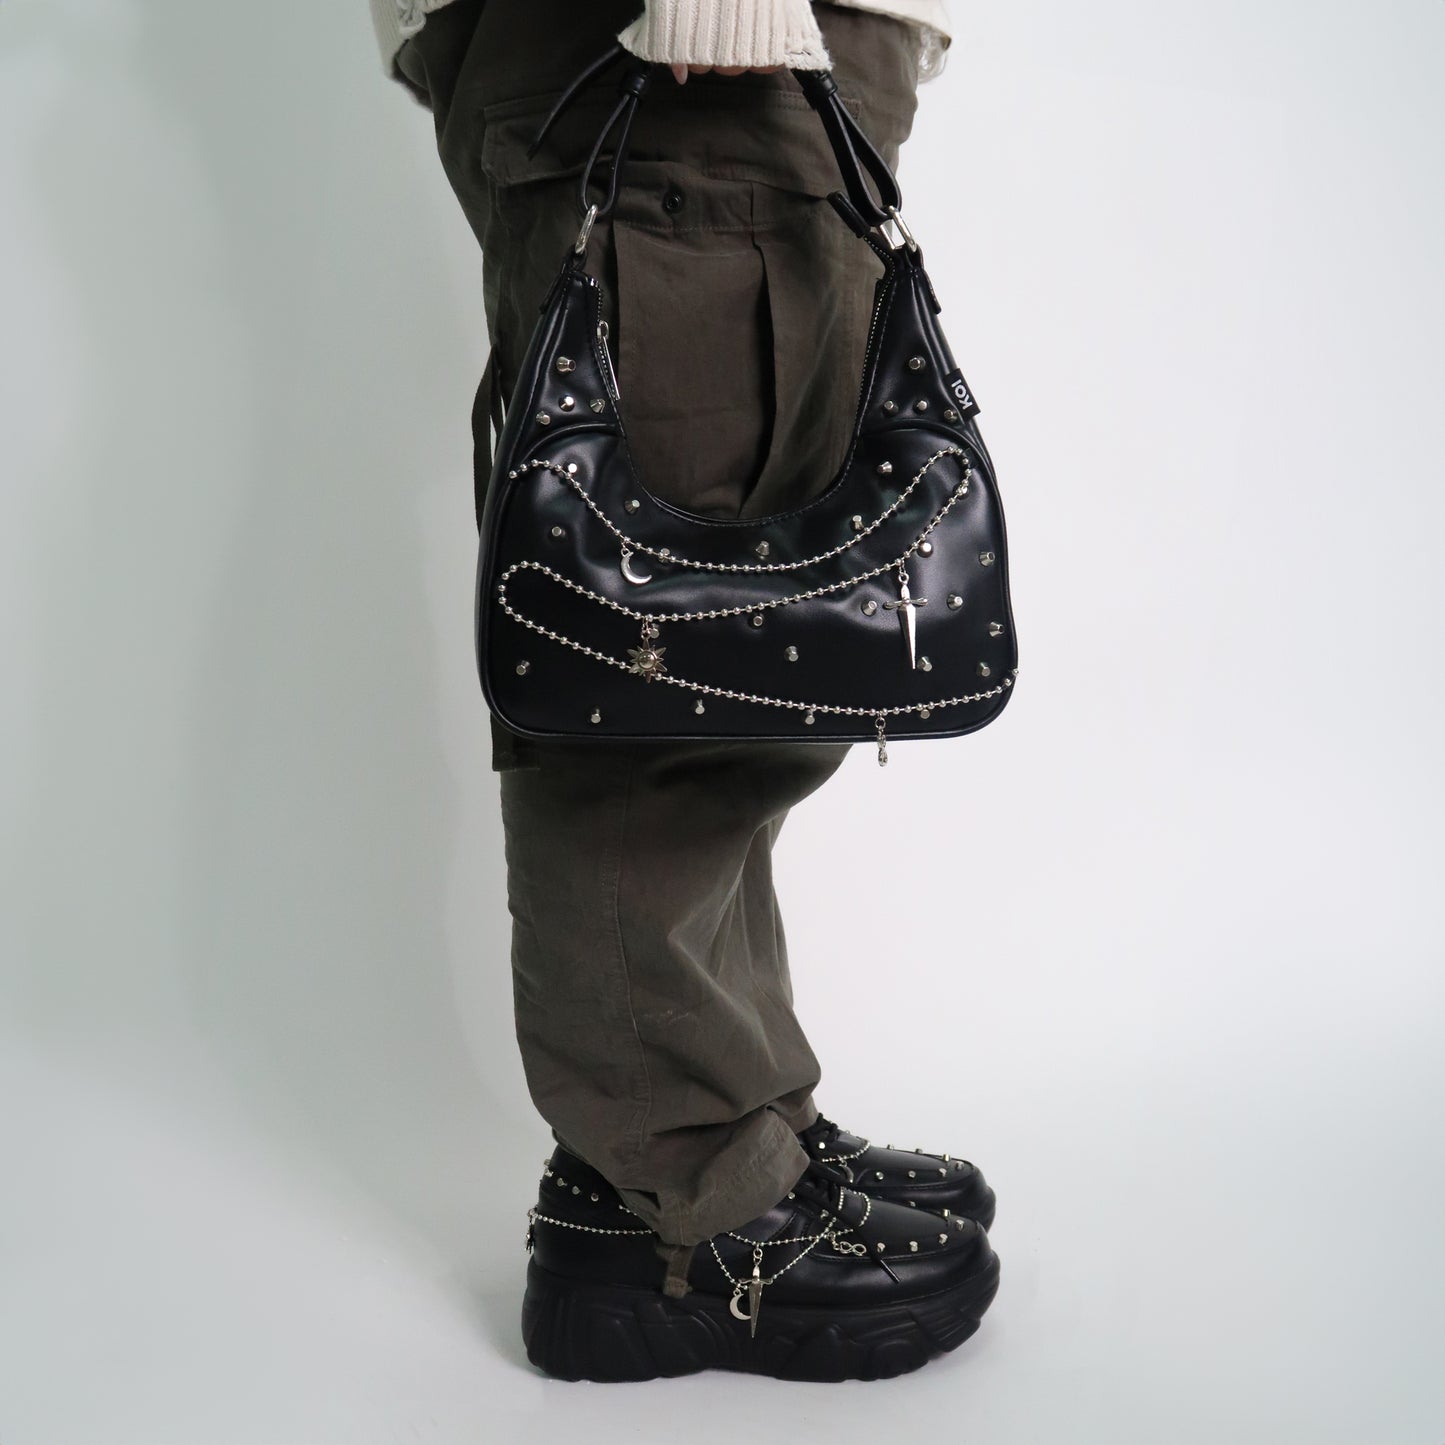 Jinx Mystic Charm Black Shoulder Bag - Accessories - KOI Footwear - OS - Full Model View